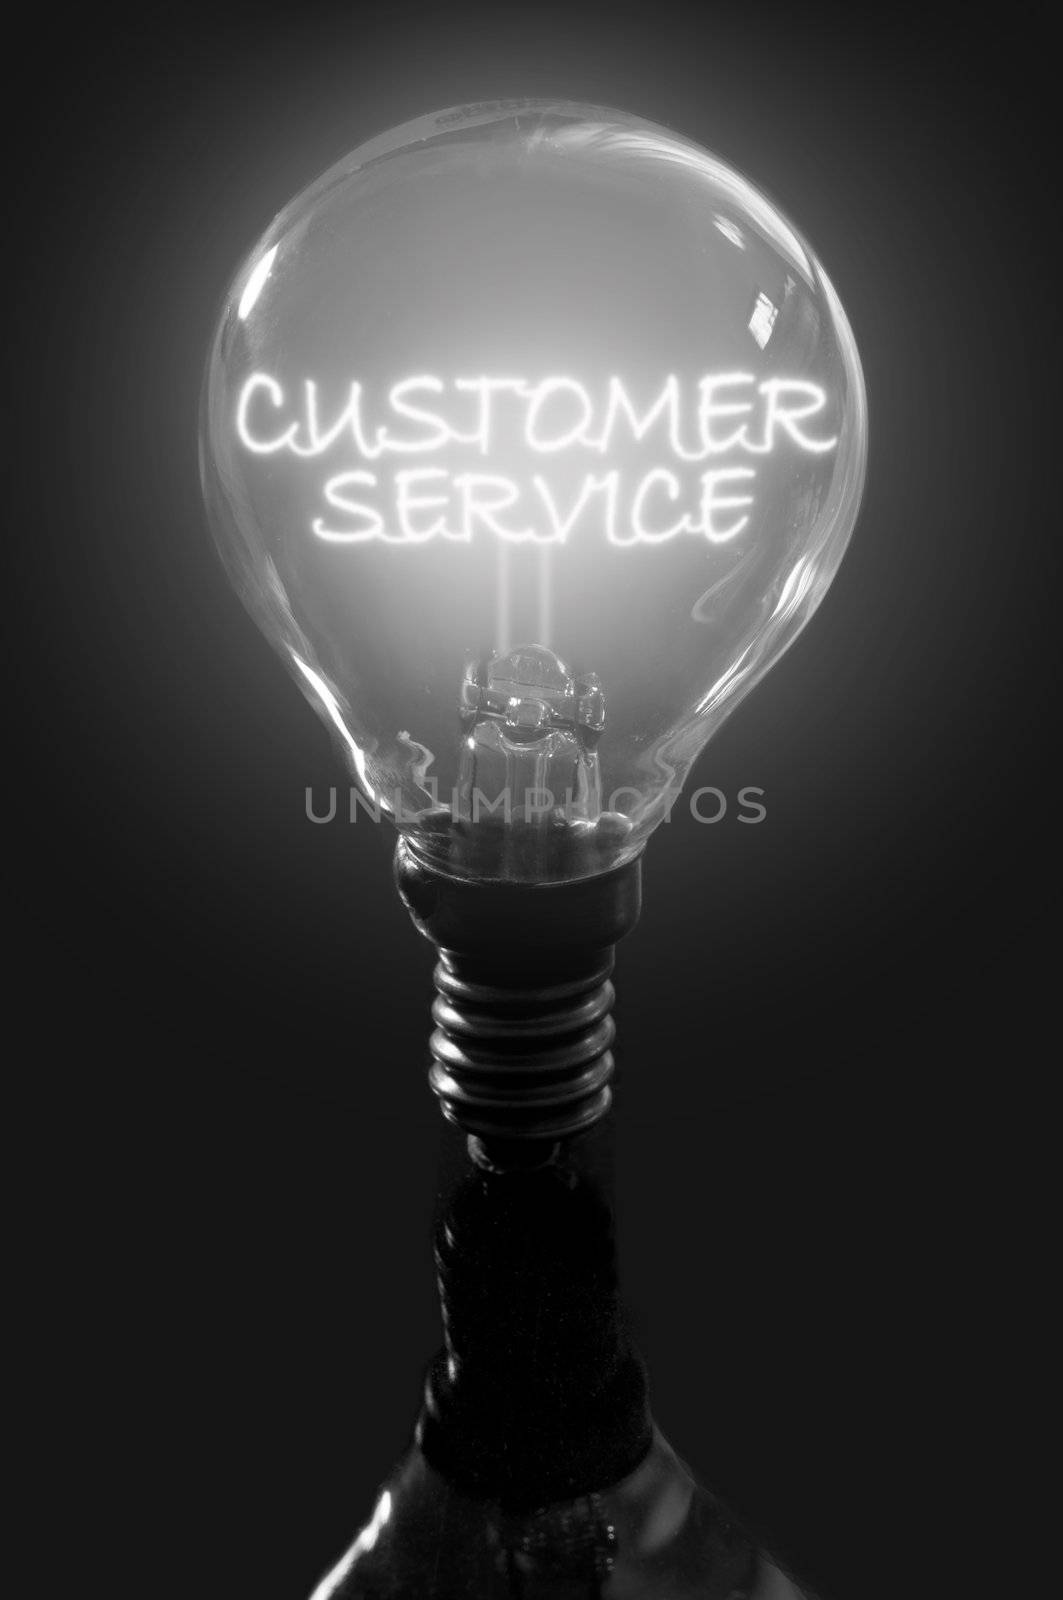 Illuminated customer service sign inside a light bulb